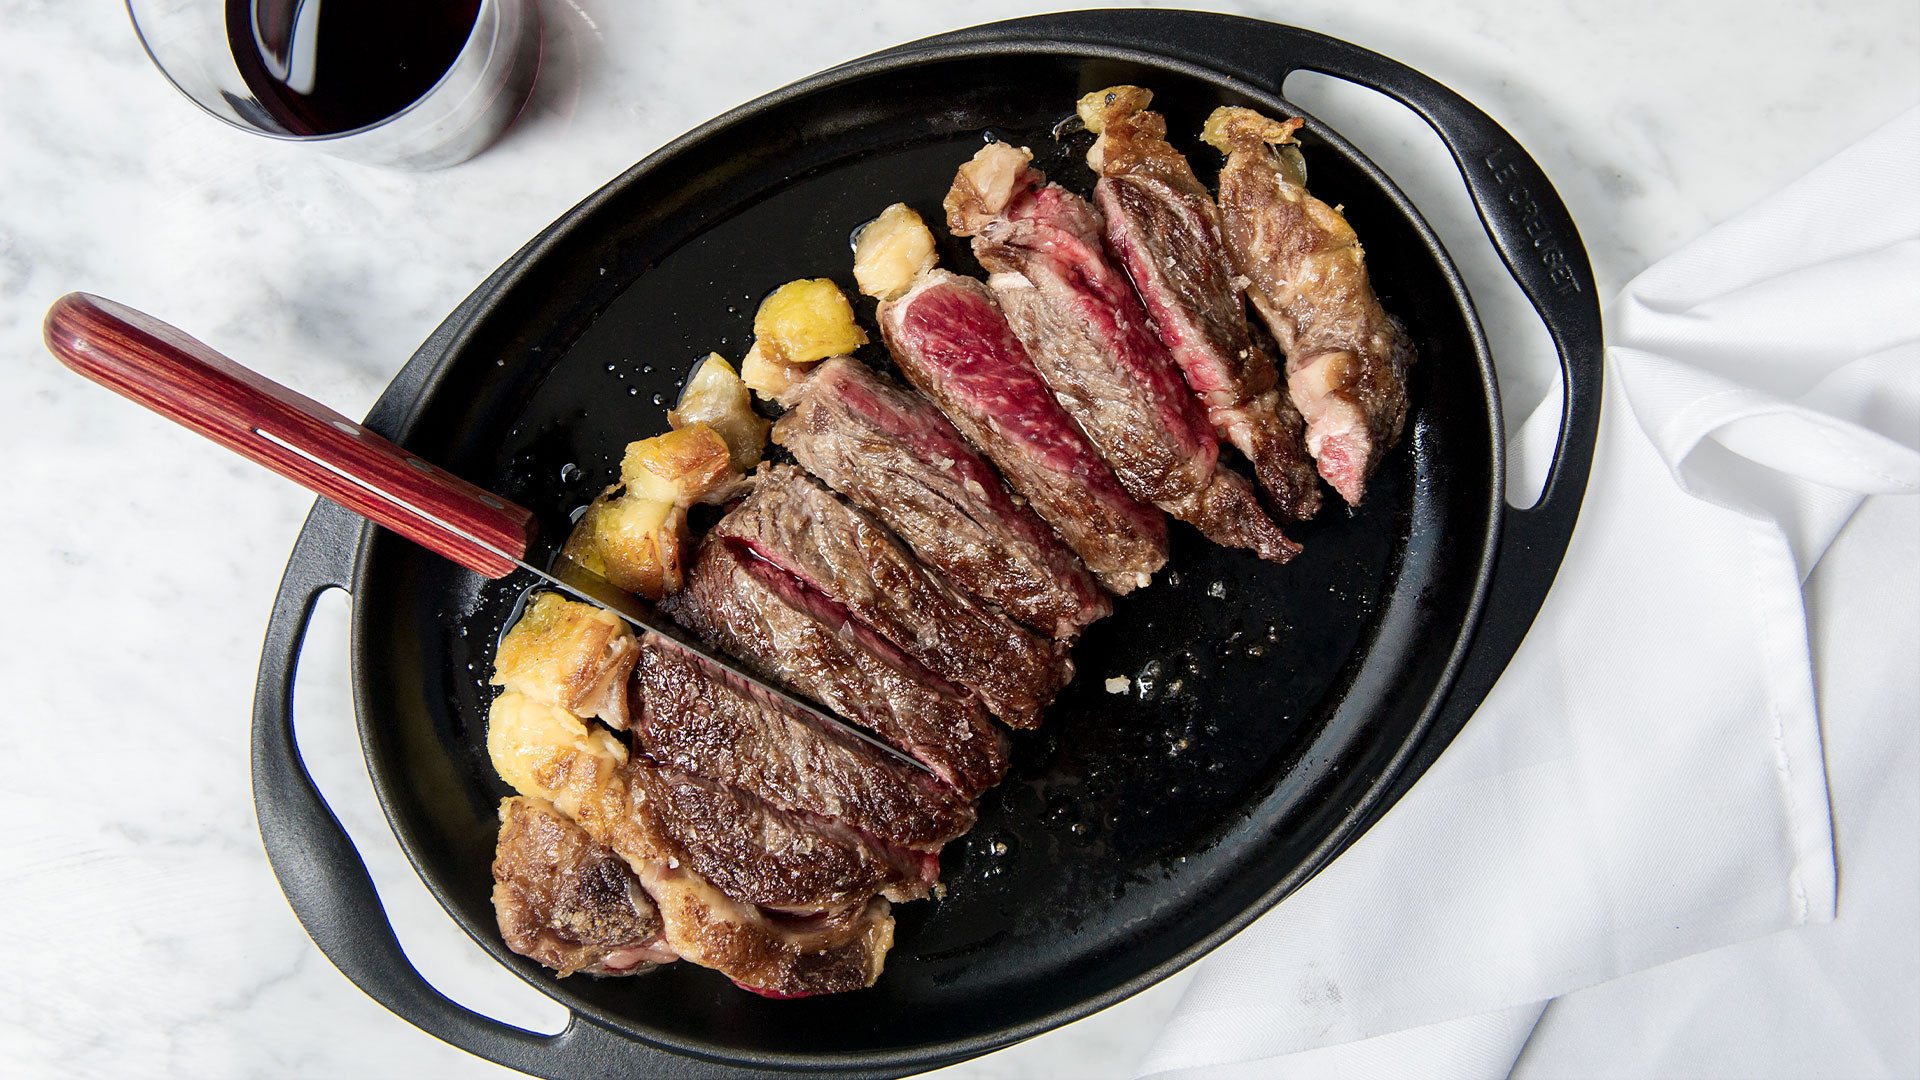 22 Best Steak Restaurants in London | Juicy Cuts to Try | Foodism